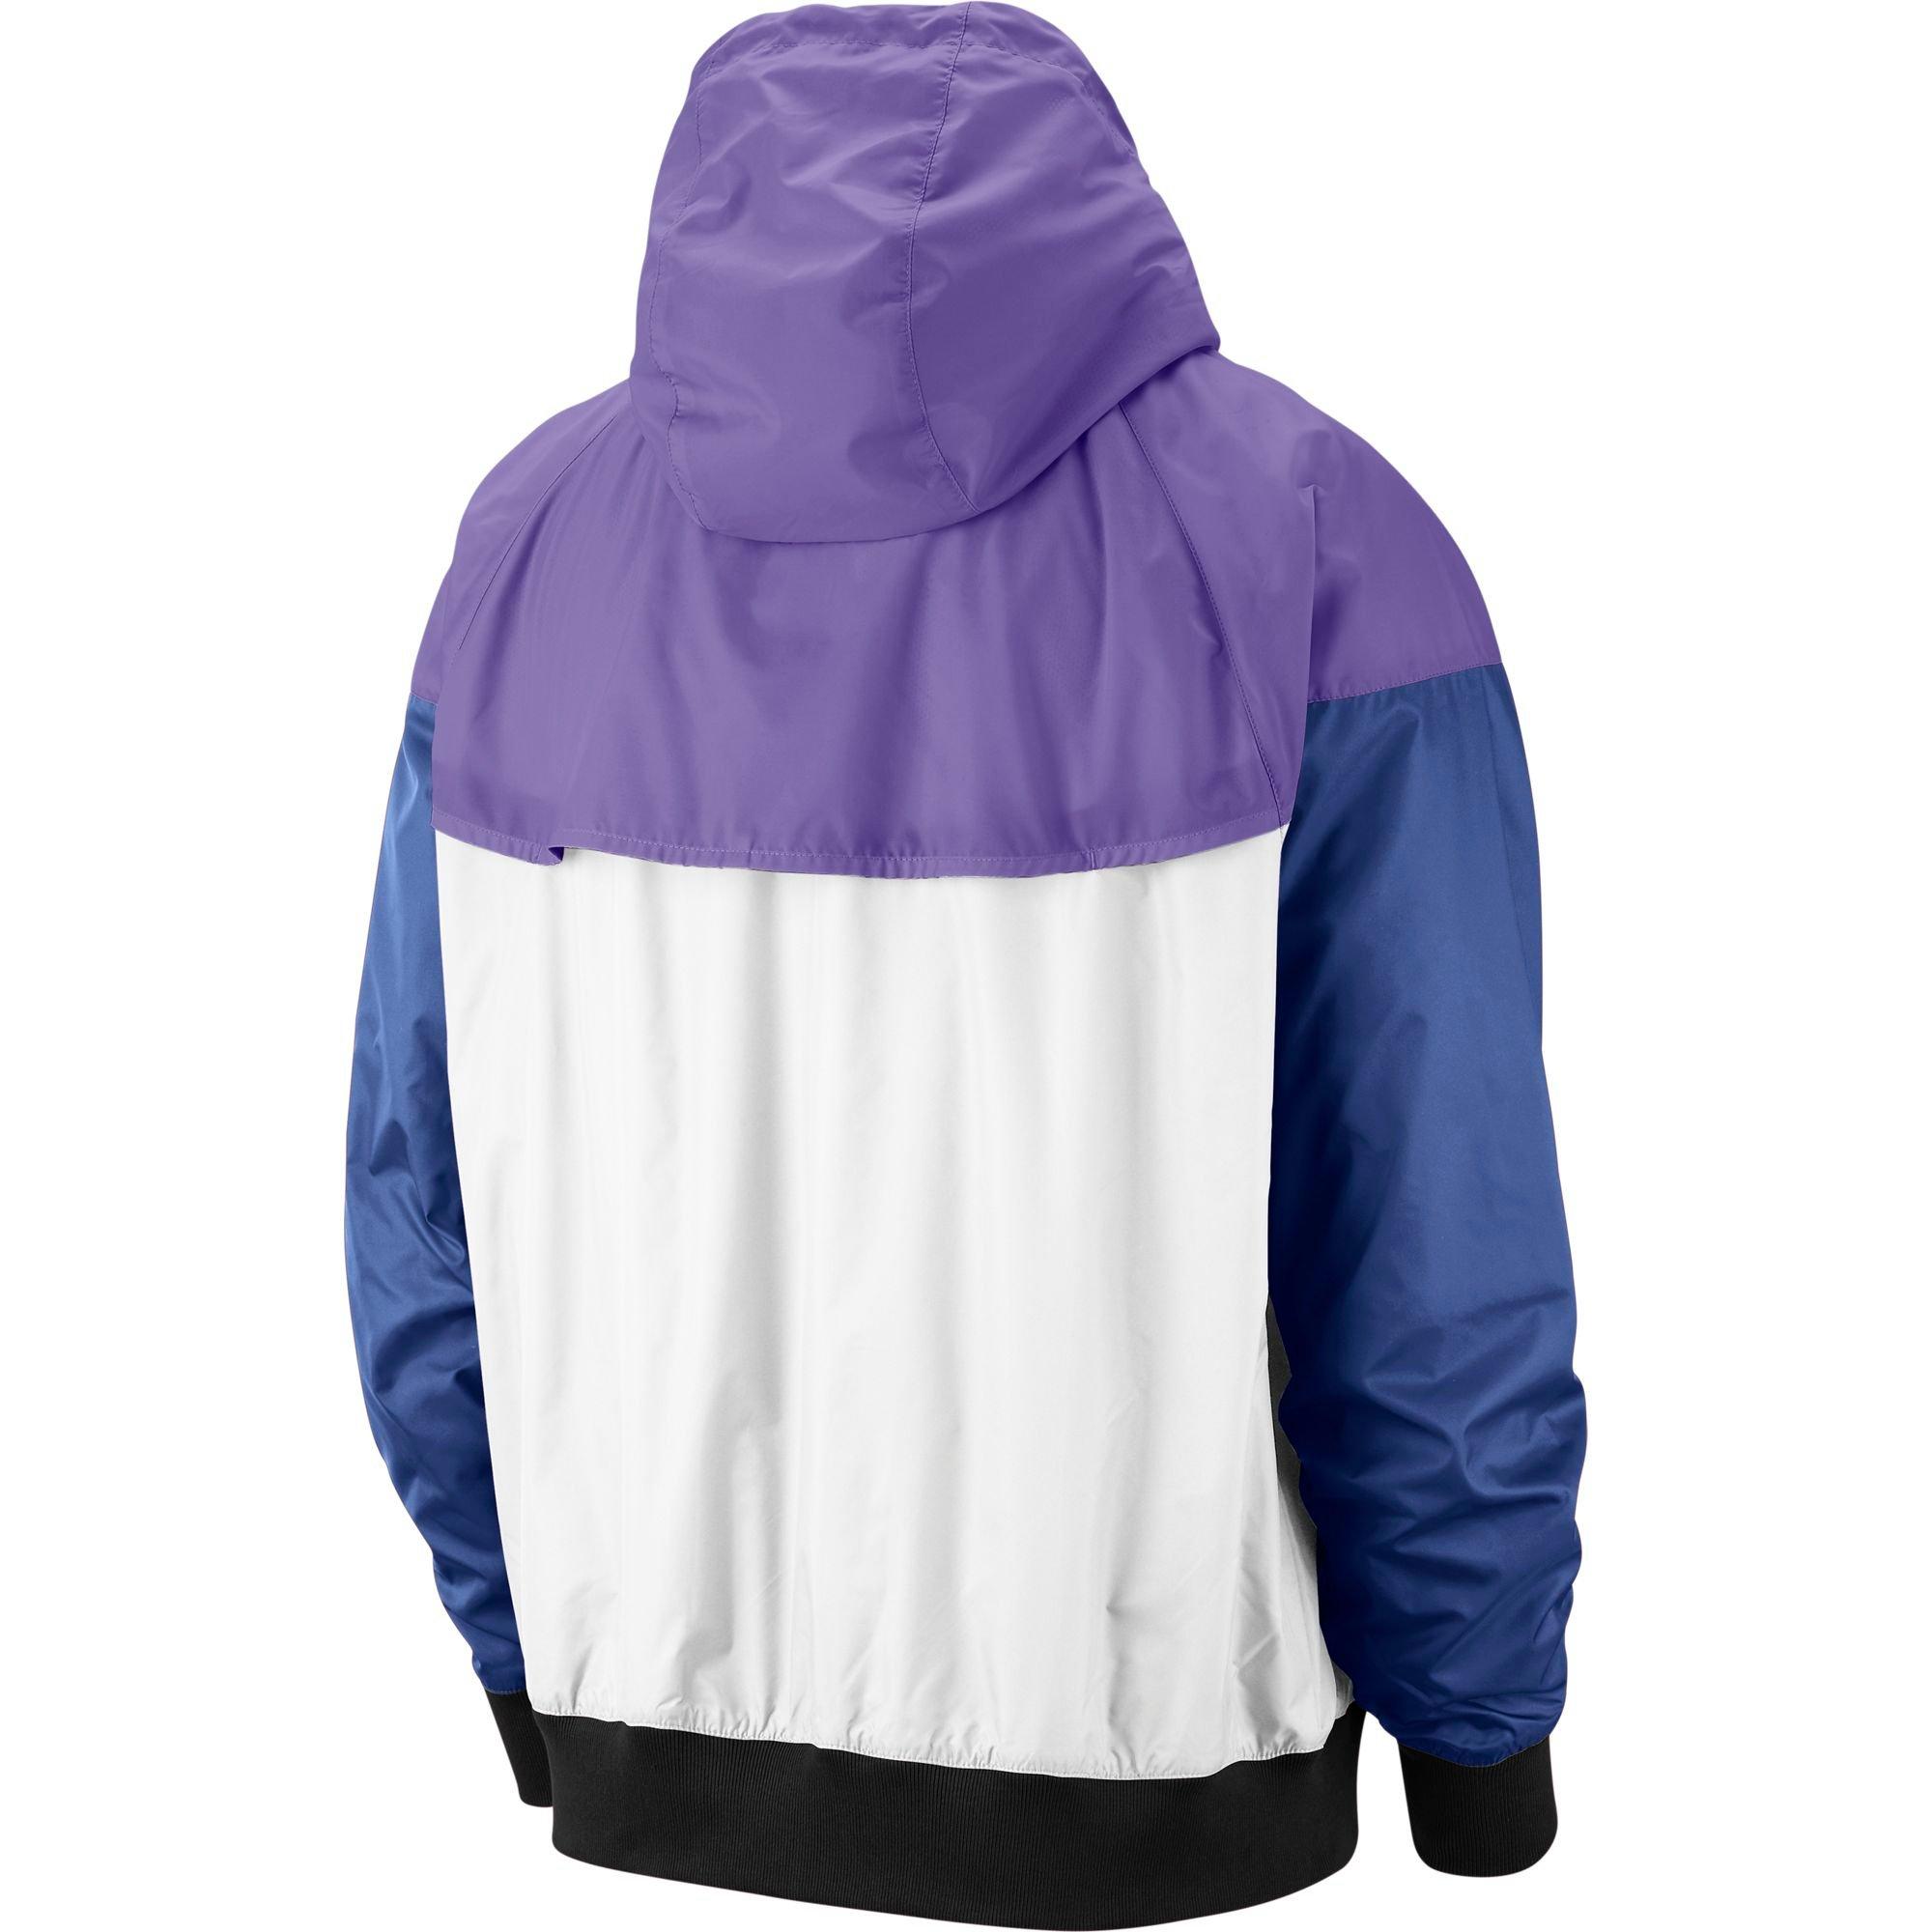 purple and white nike jacket